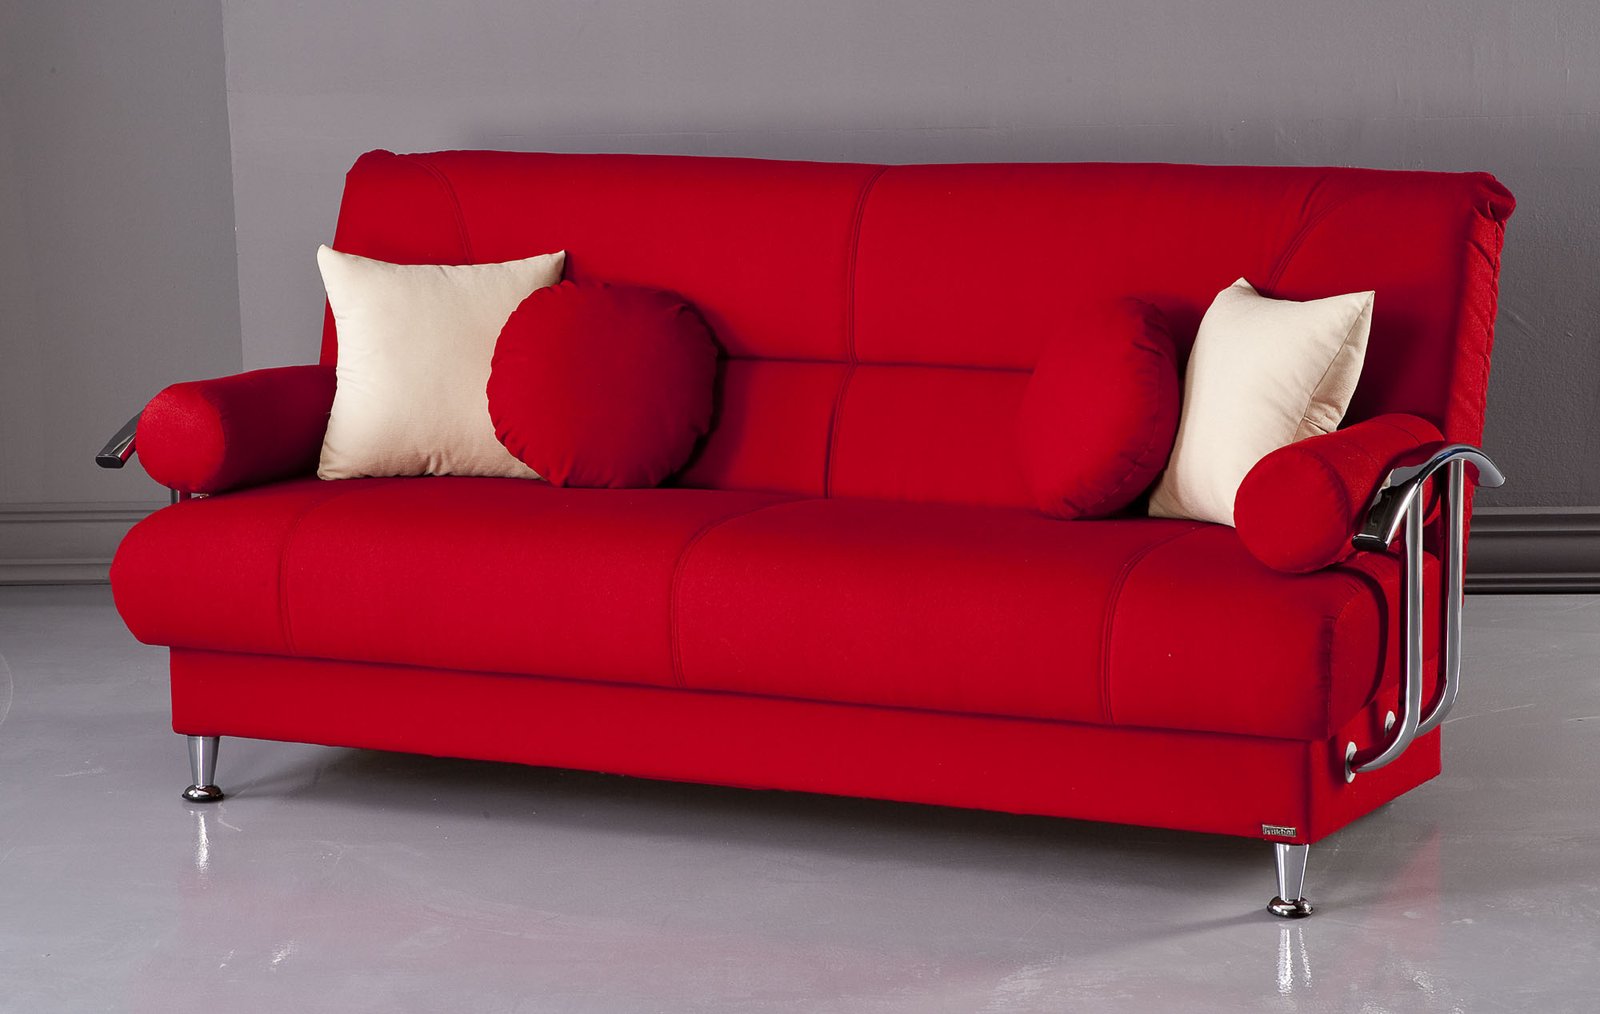 red leather futon sofa